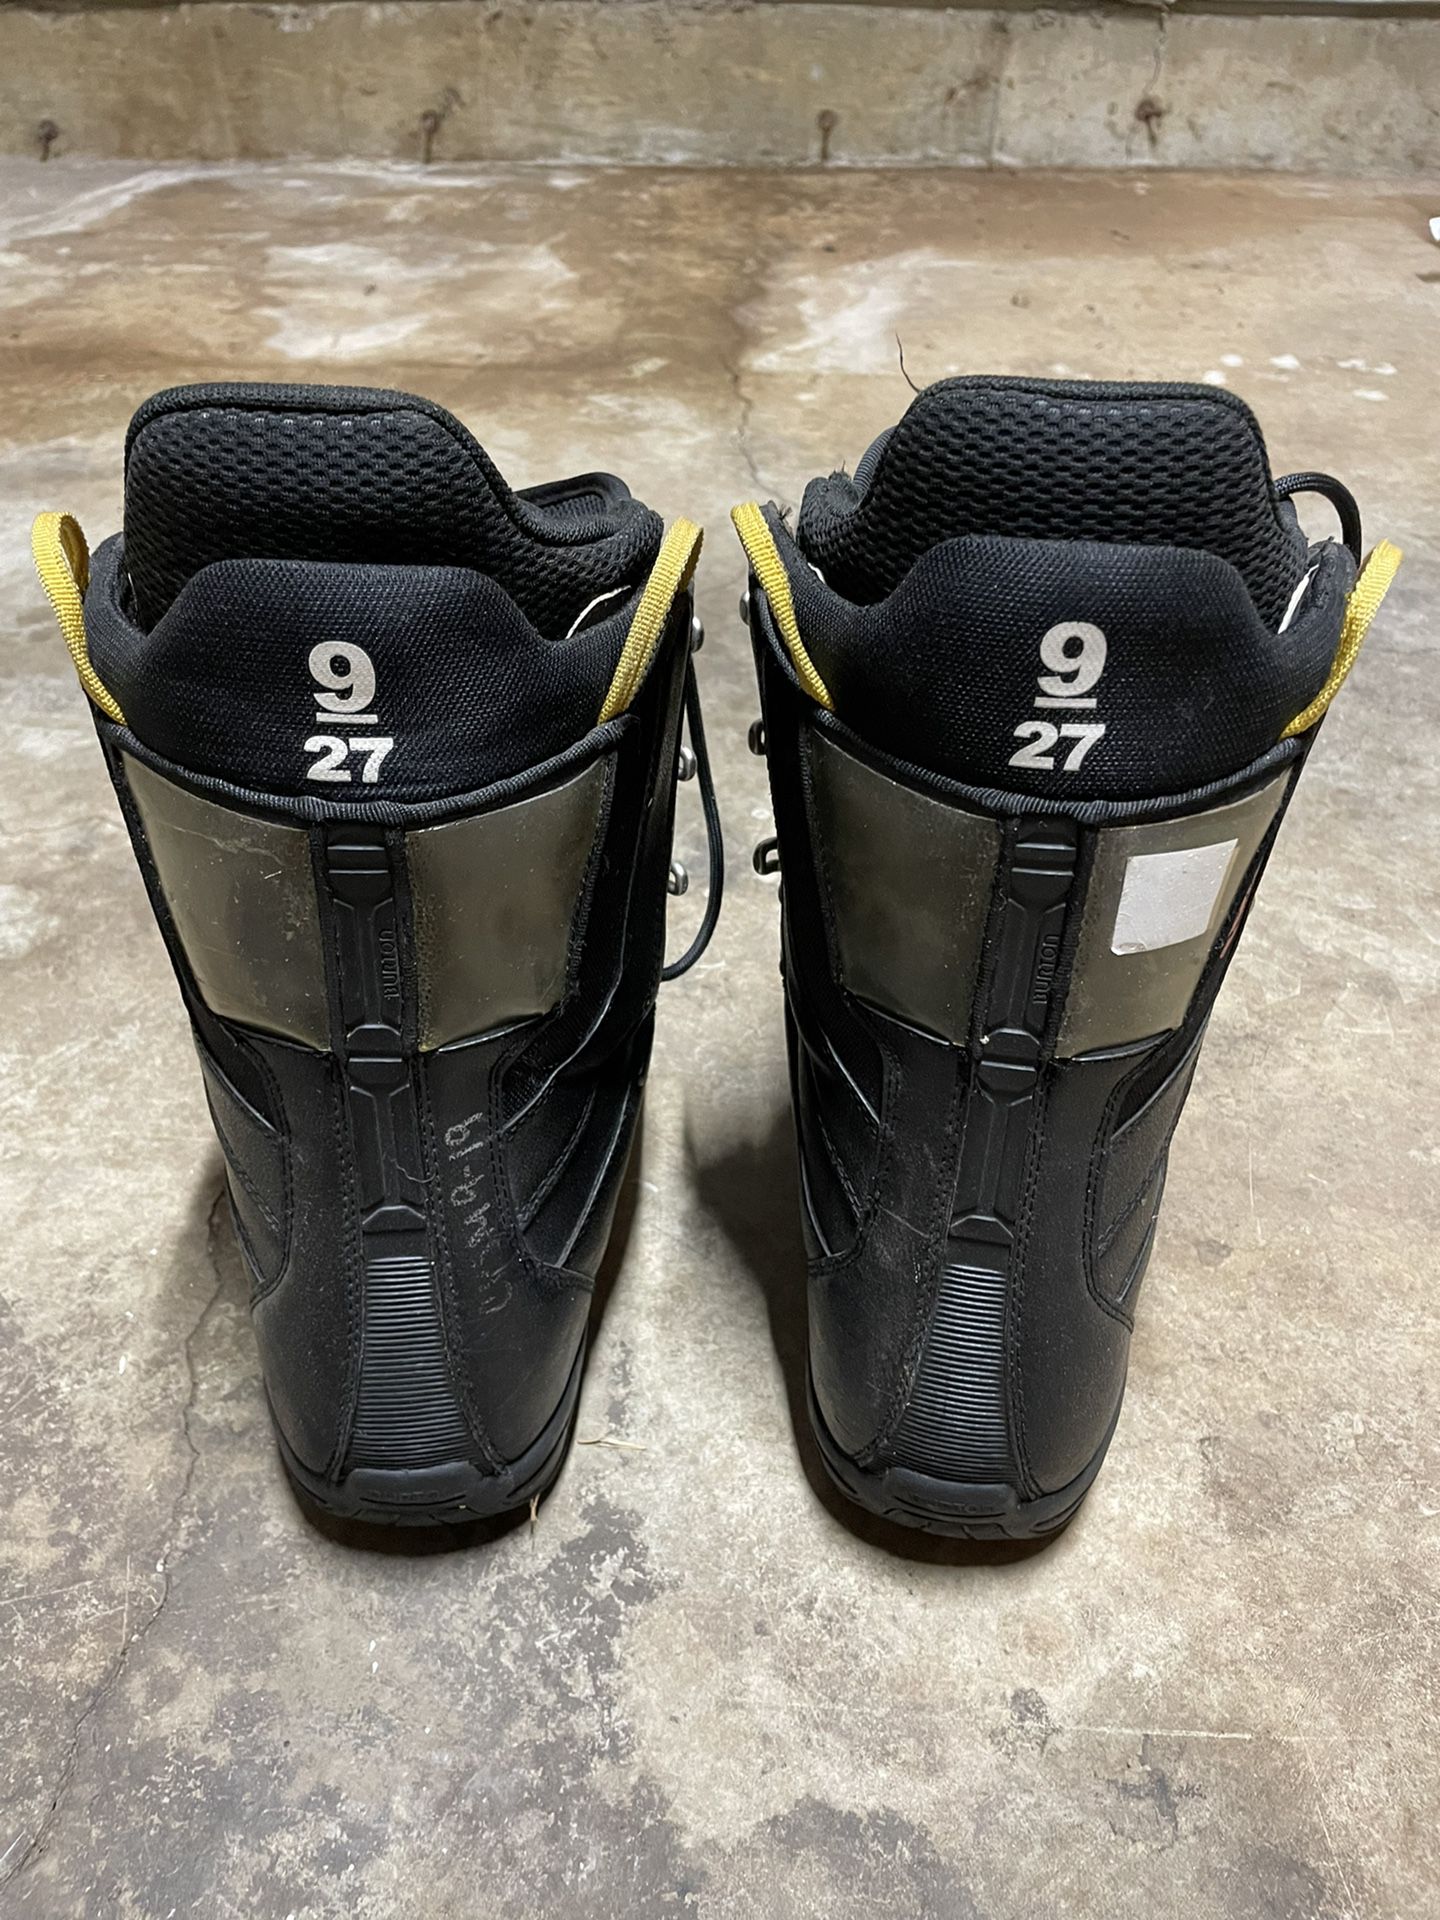 Burton Men’s Size 9 Snowboard Boots